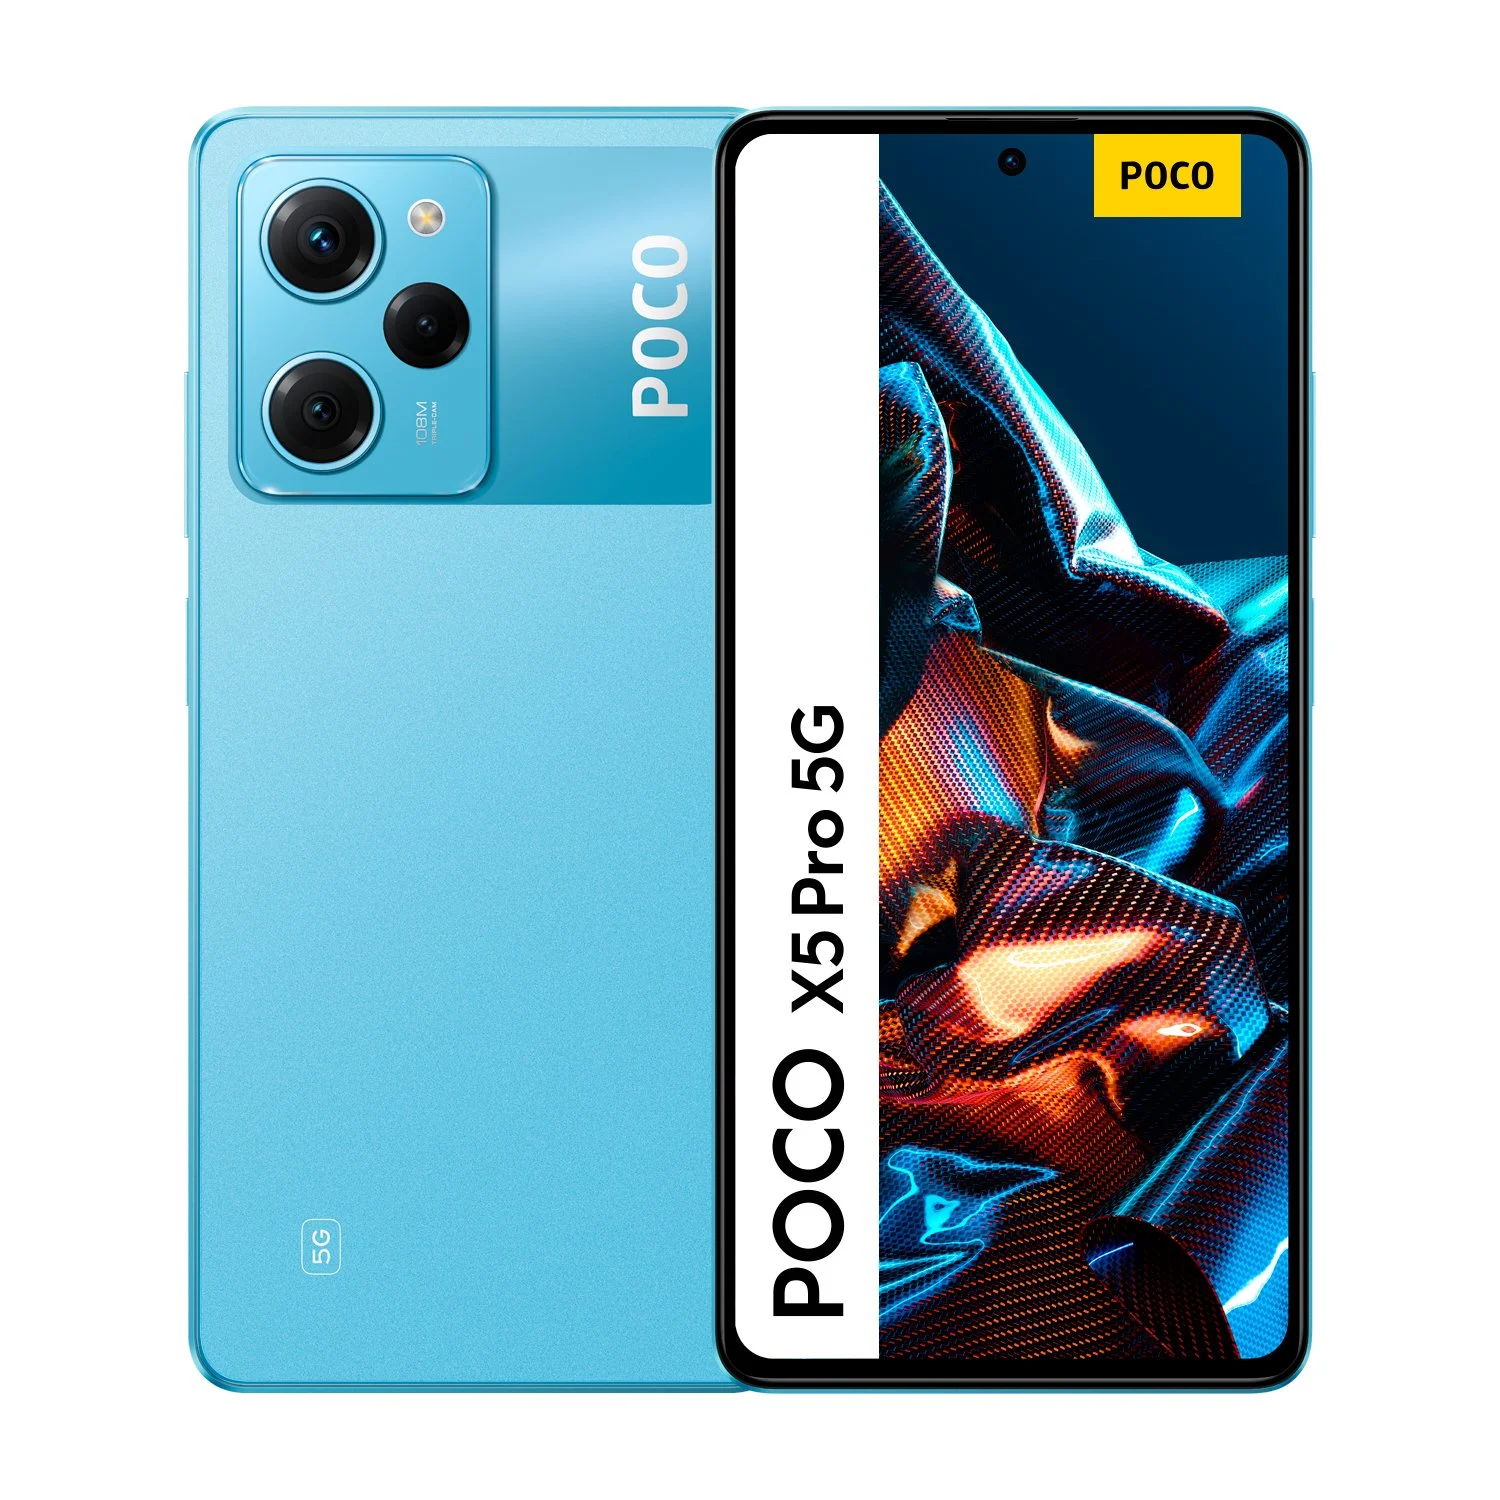 Tienda Vargas, Celular Xiaomi Poco X3 Pro Blue 256GB, Celulares